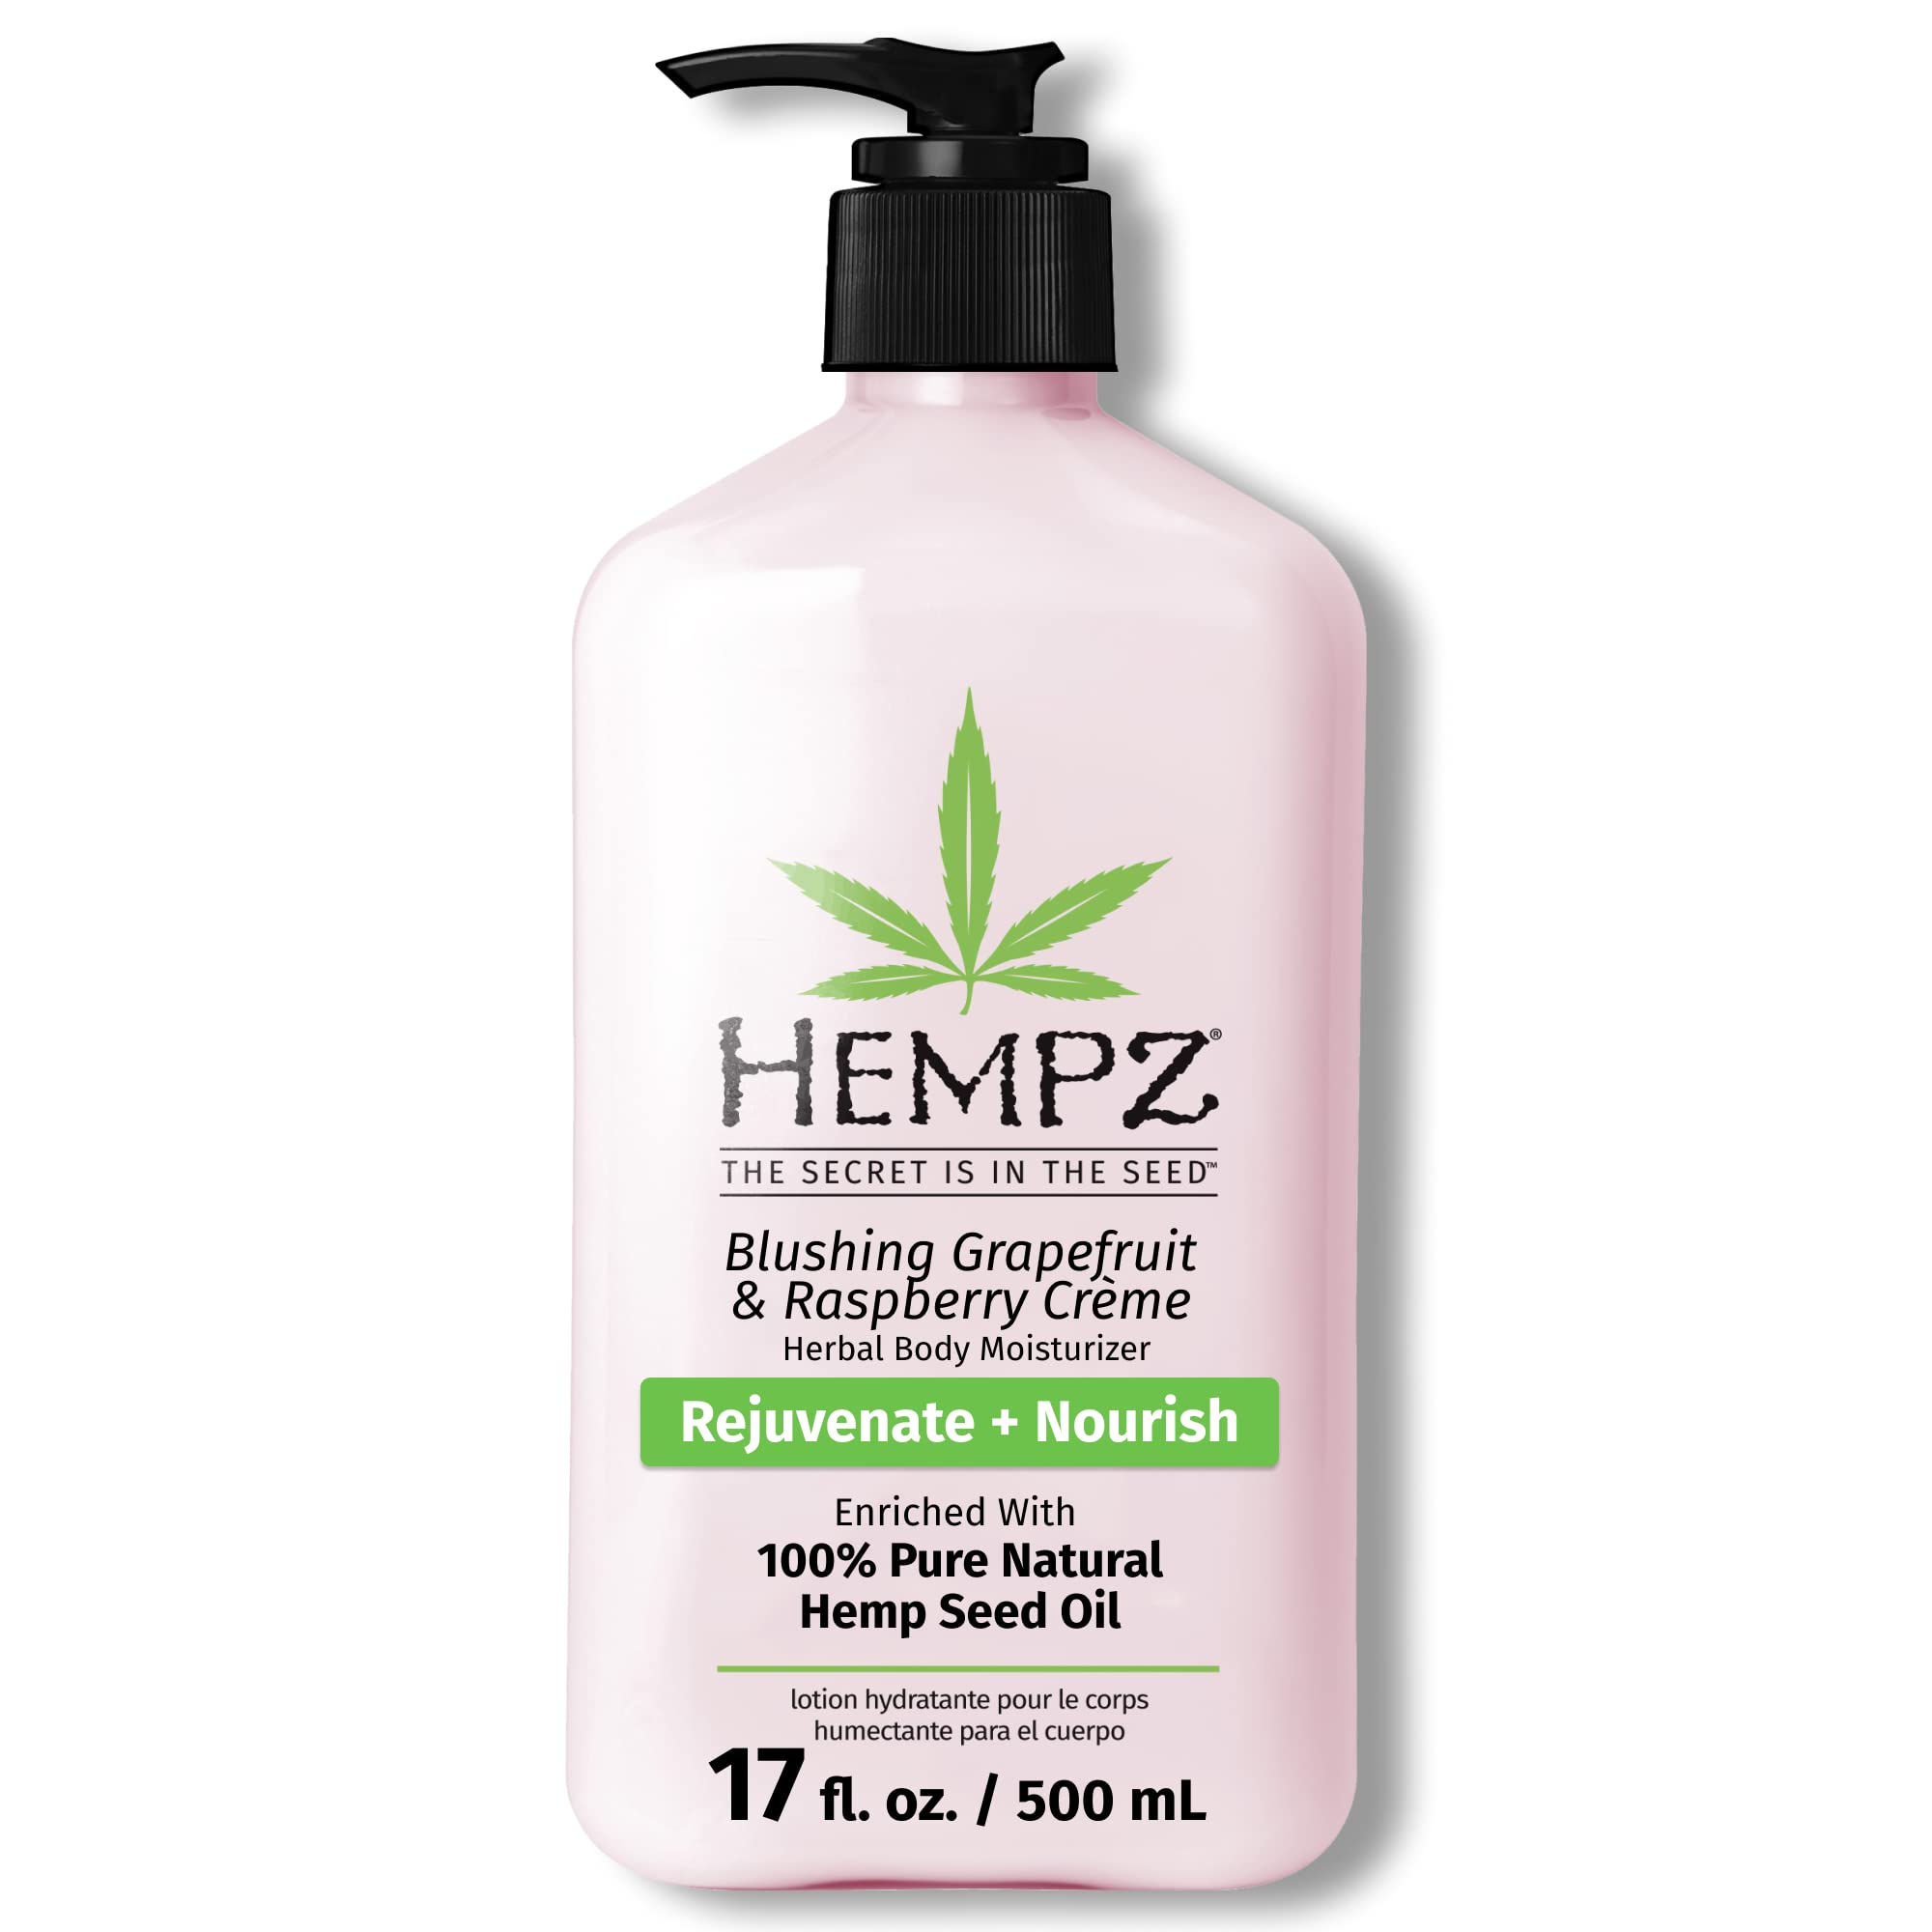 HEMPZ Body Lotion - Grapefruit & Raspberry Crème Daily Moisturizing Cream, Shea Butter Body Moisturizer - Skin Care Products, Hemp Seed Oil - Large